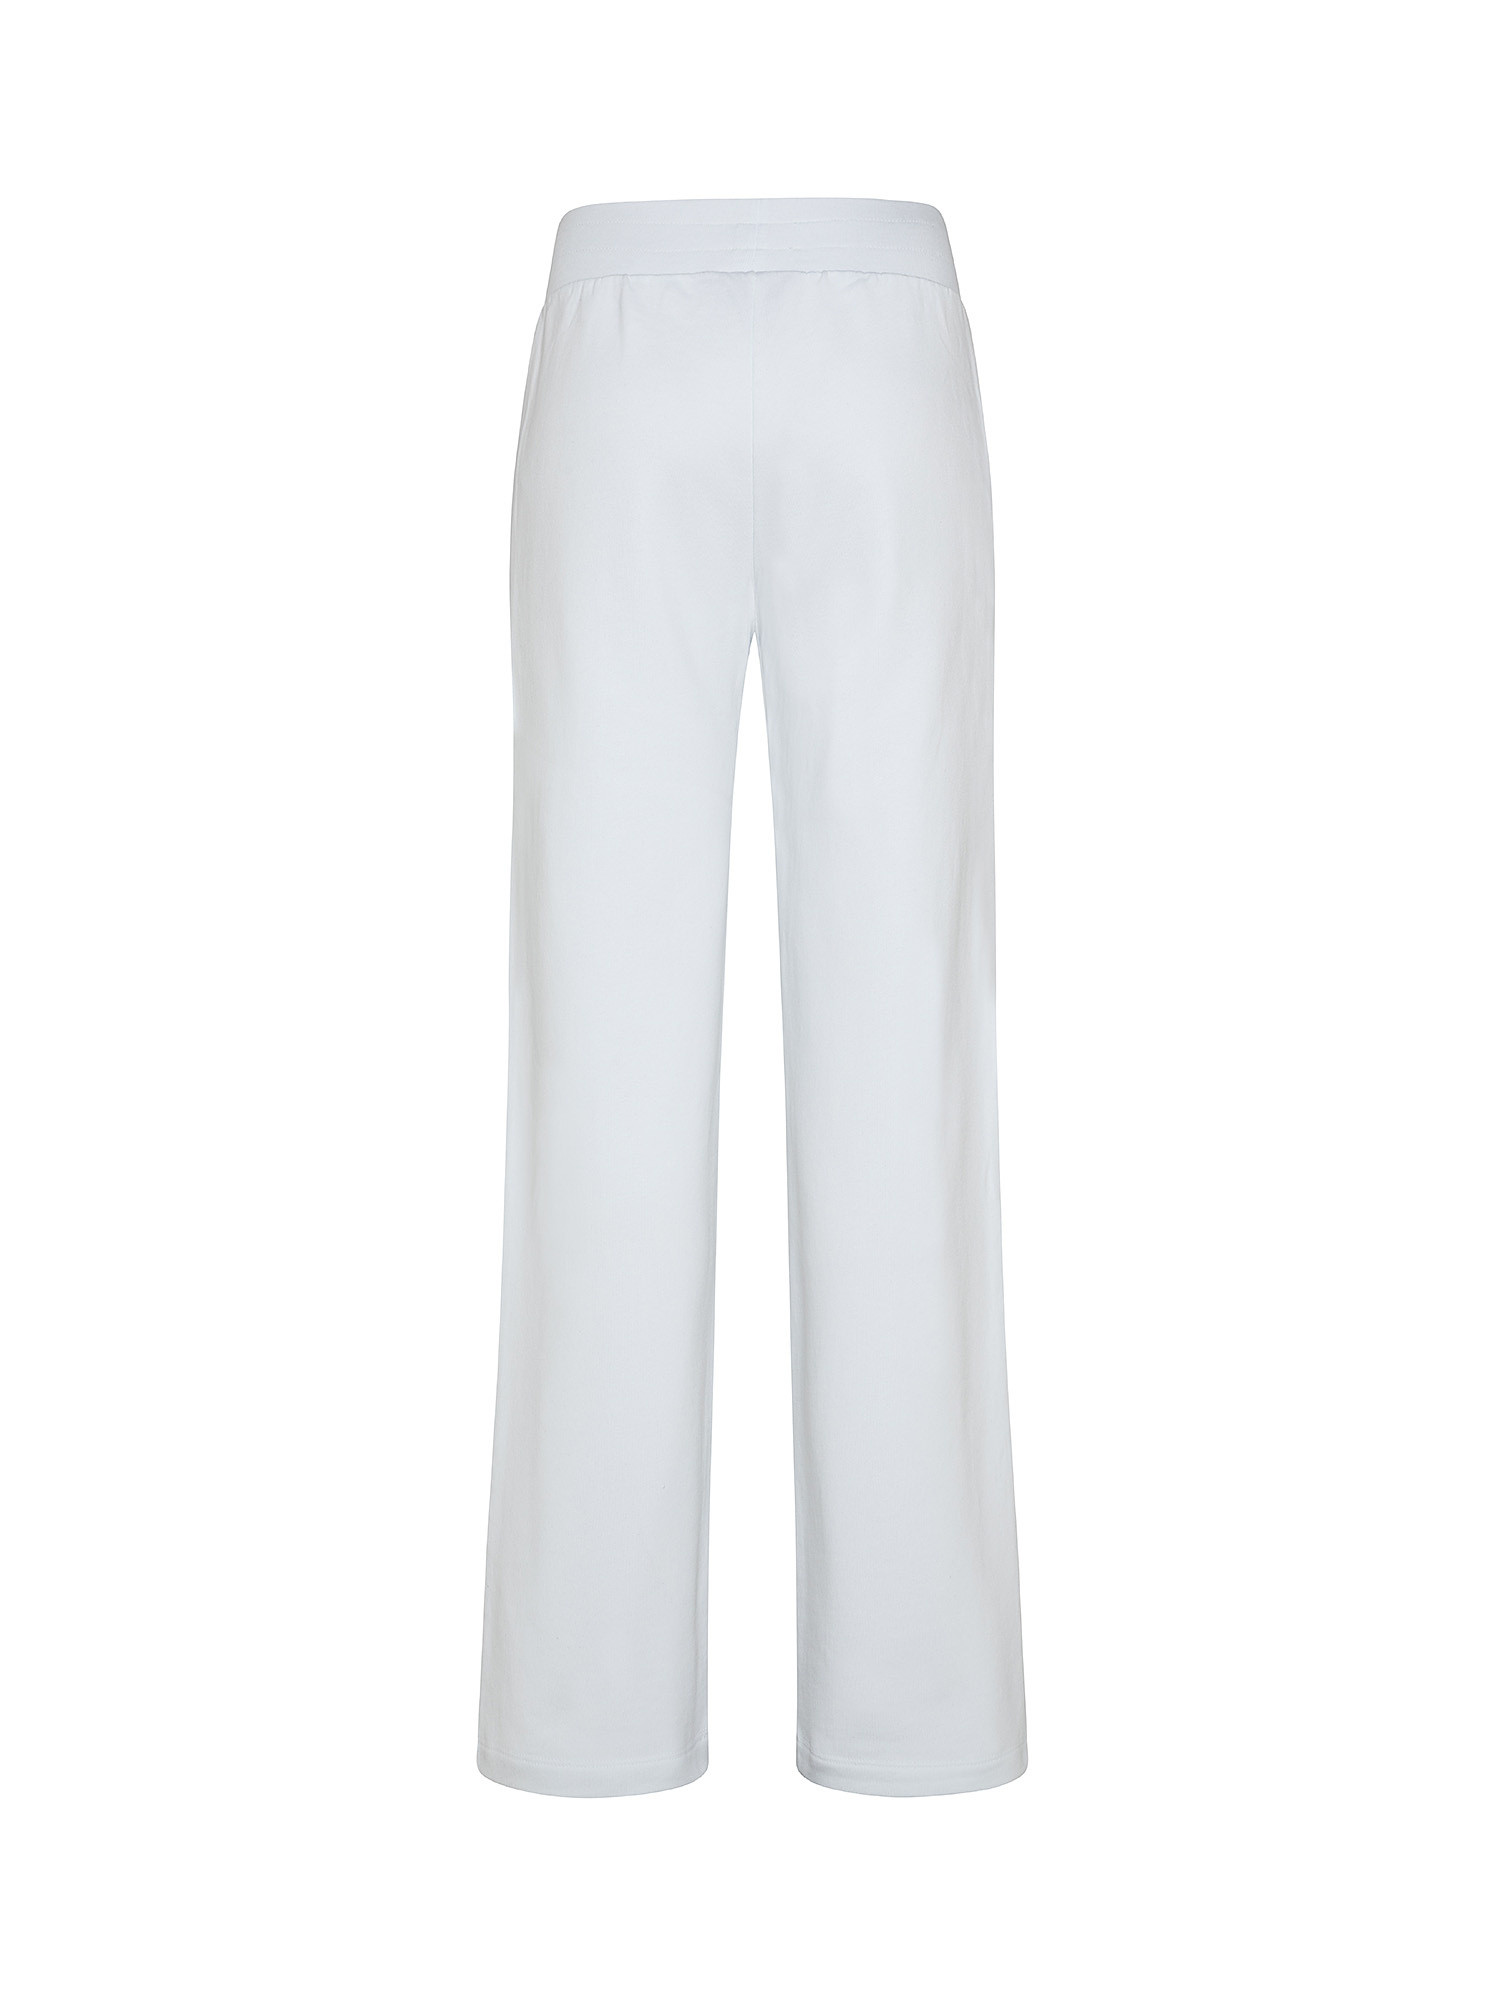 Pantalone, Bianco, large